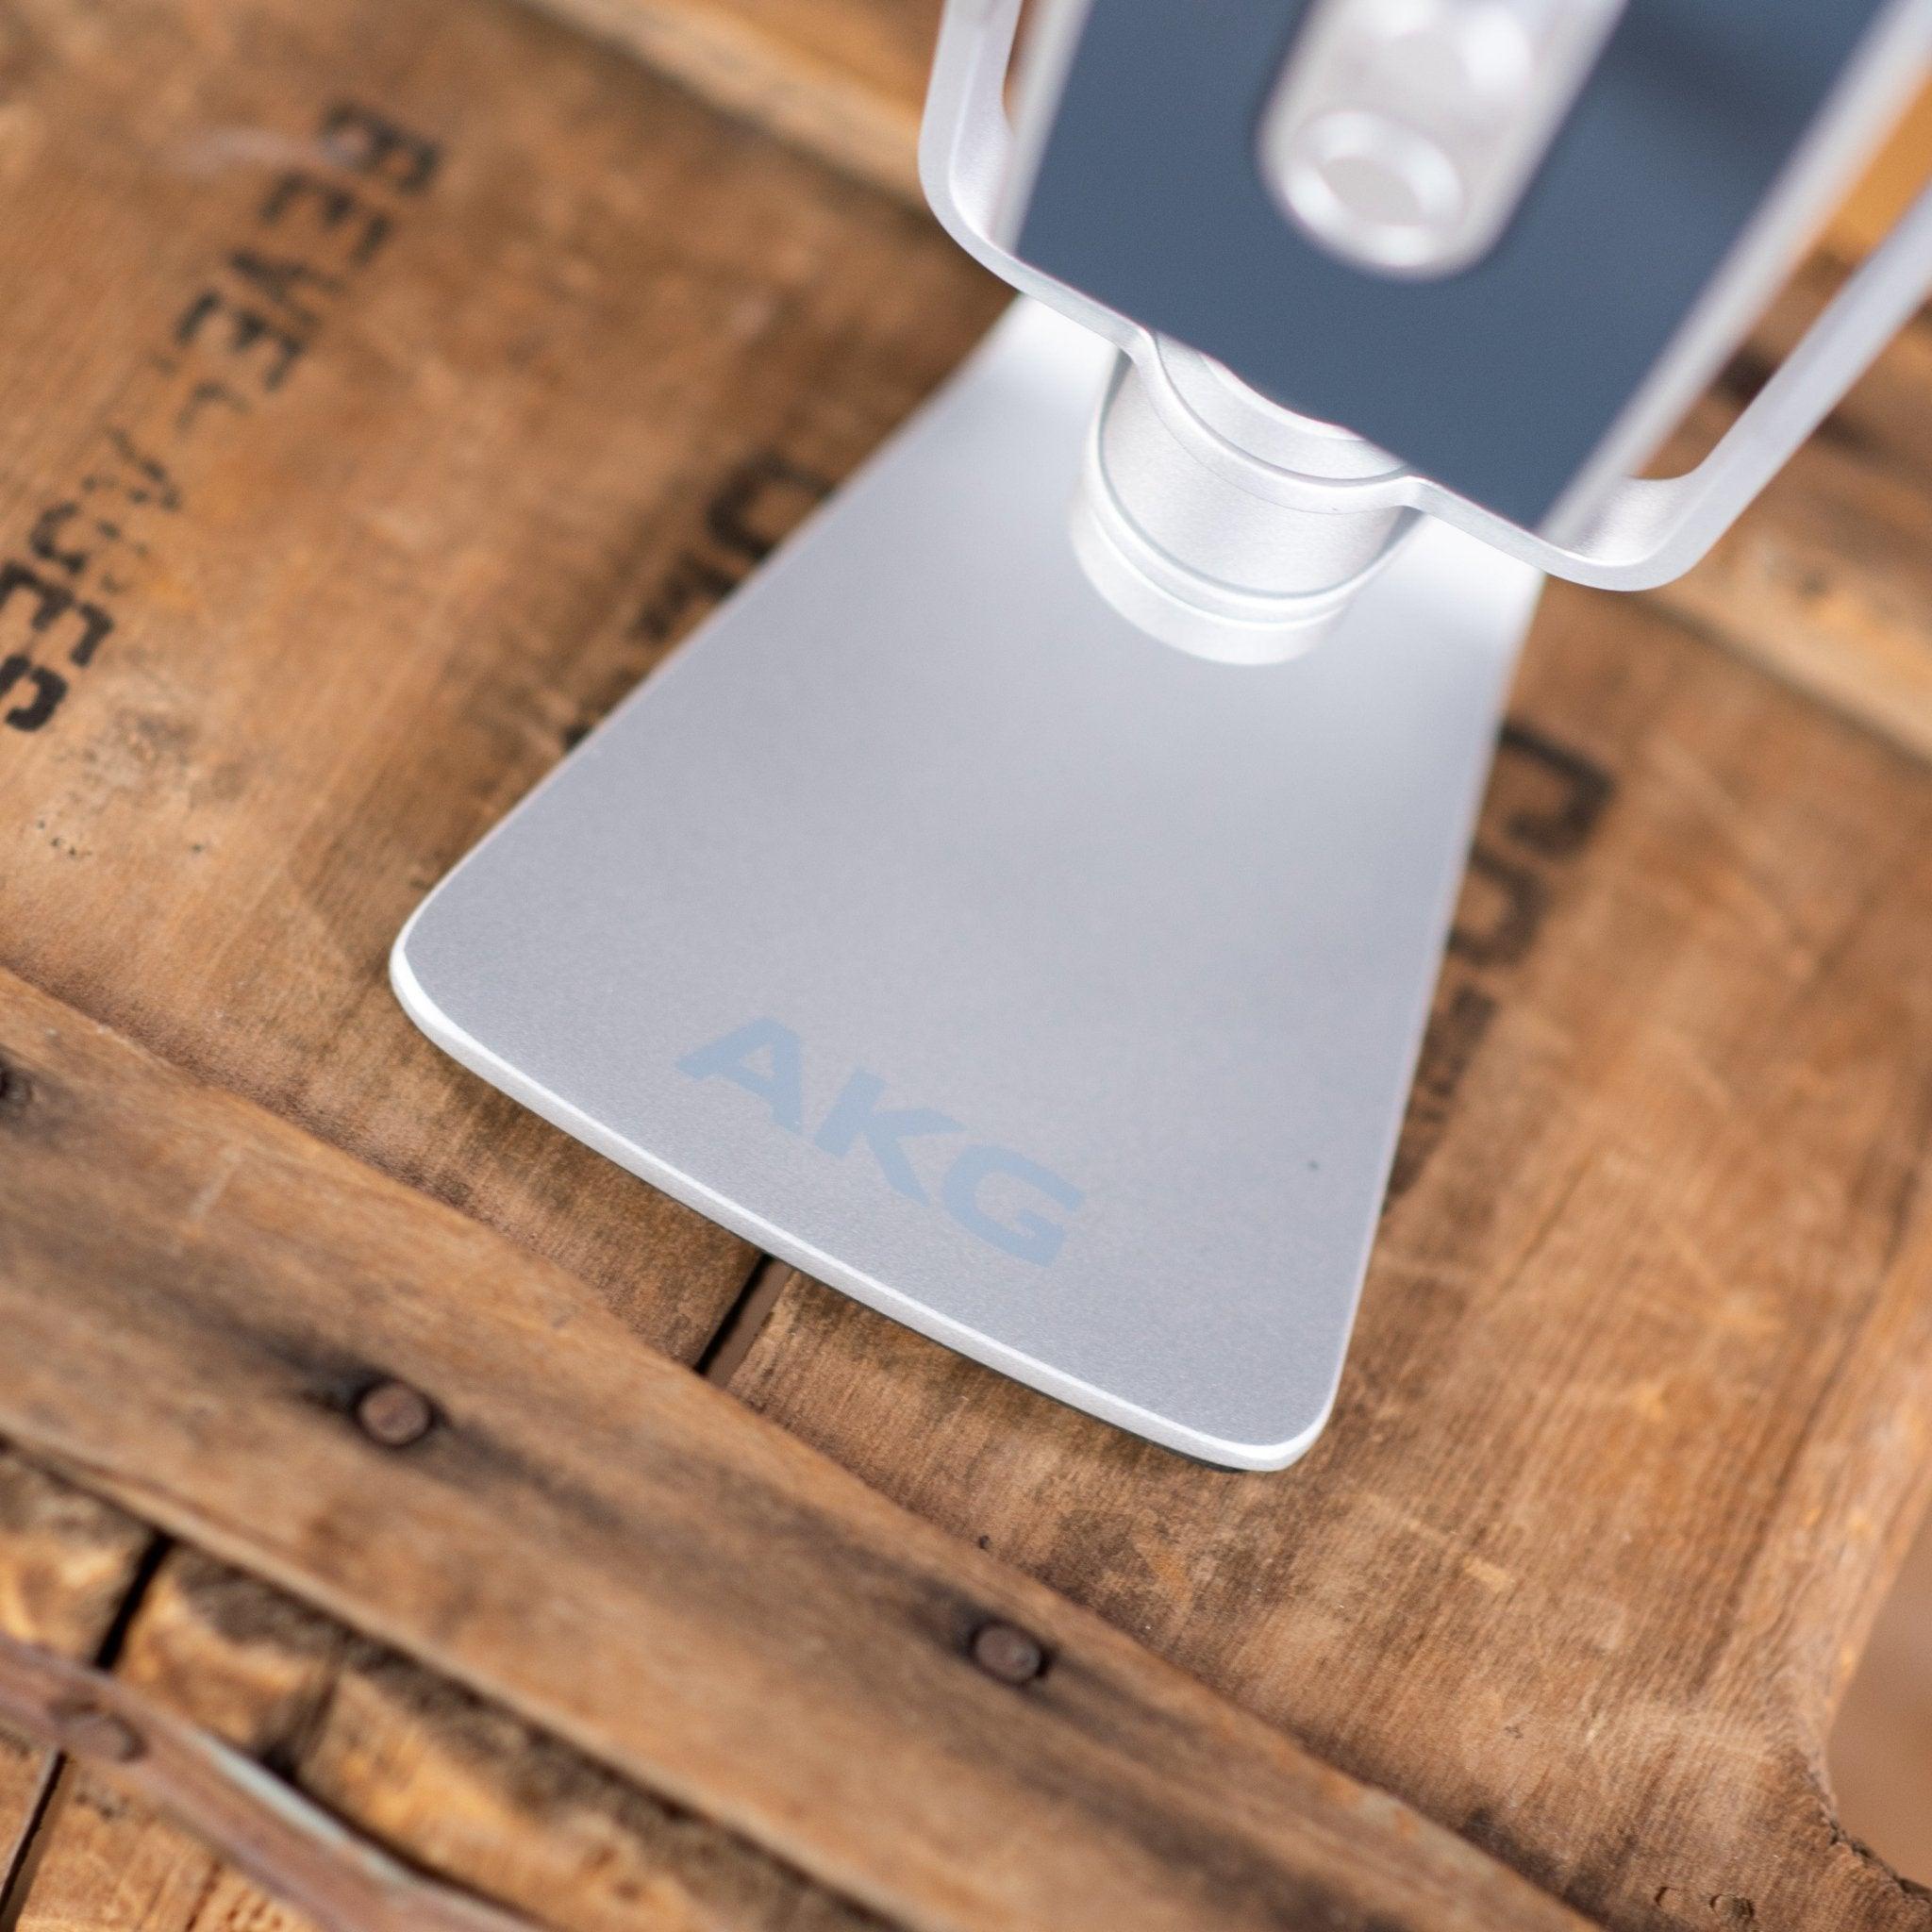 AKG Lyra Ultra-HD Multimode USB Microphone - Impulse Music Co.